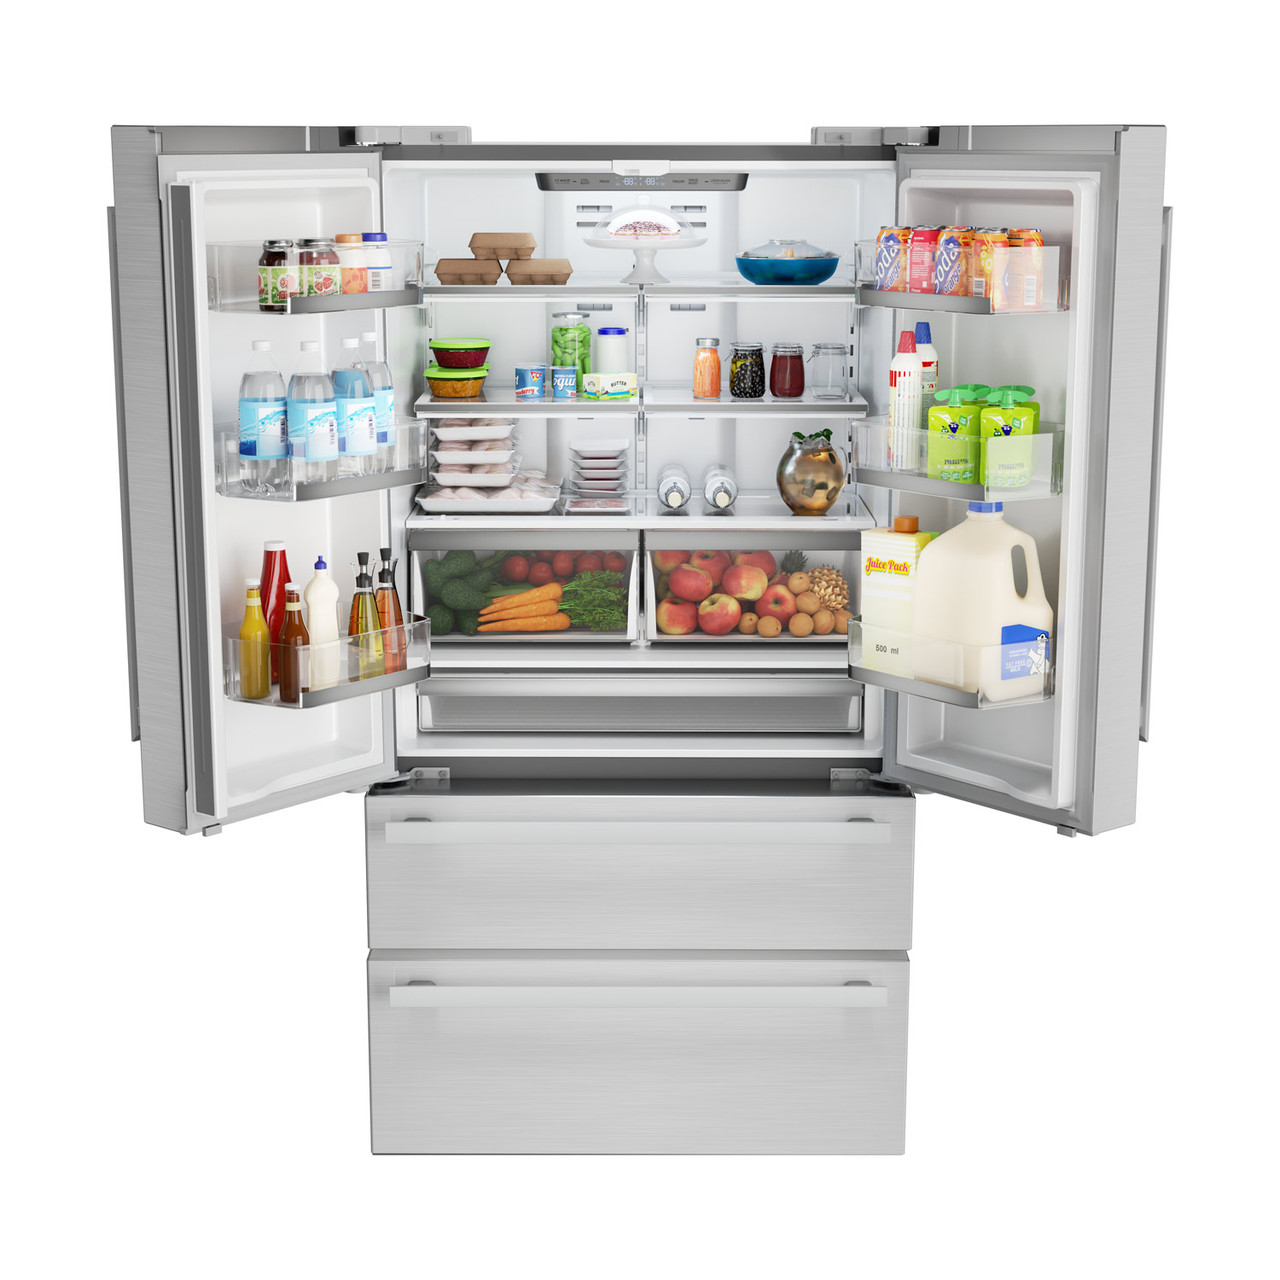 Sharp French 4-Door Counter-Depth Refrigerator (SJG2351FS) interior with food